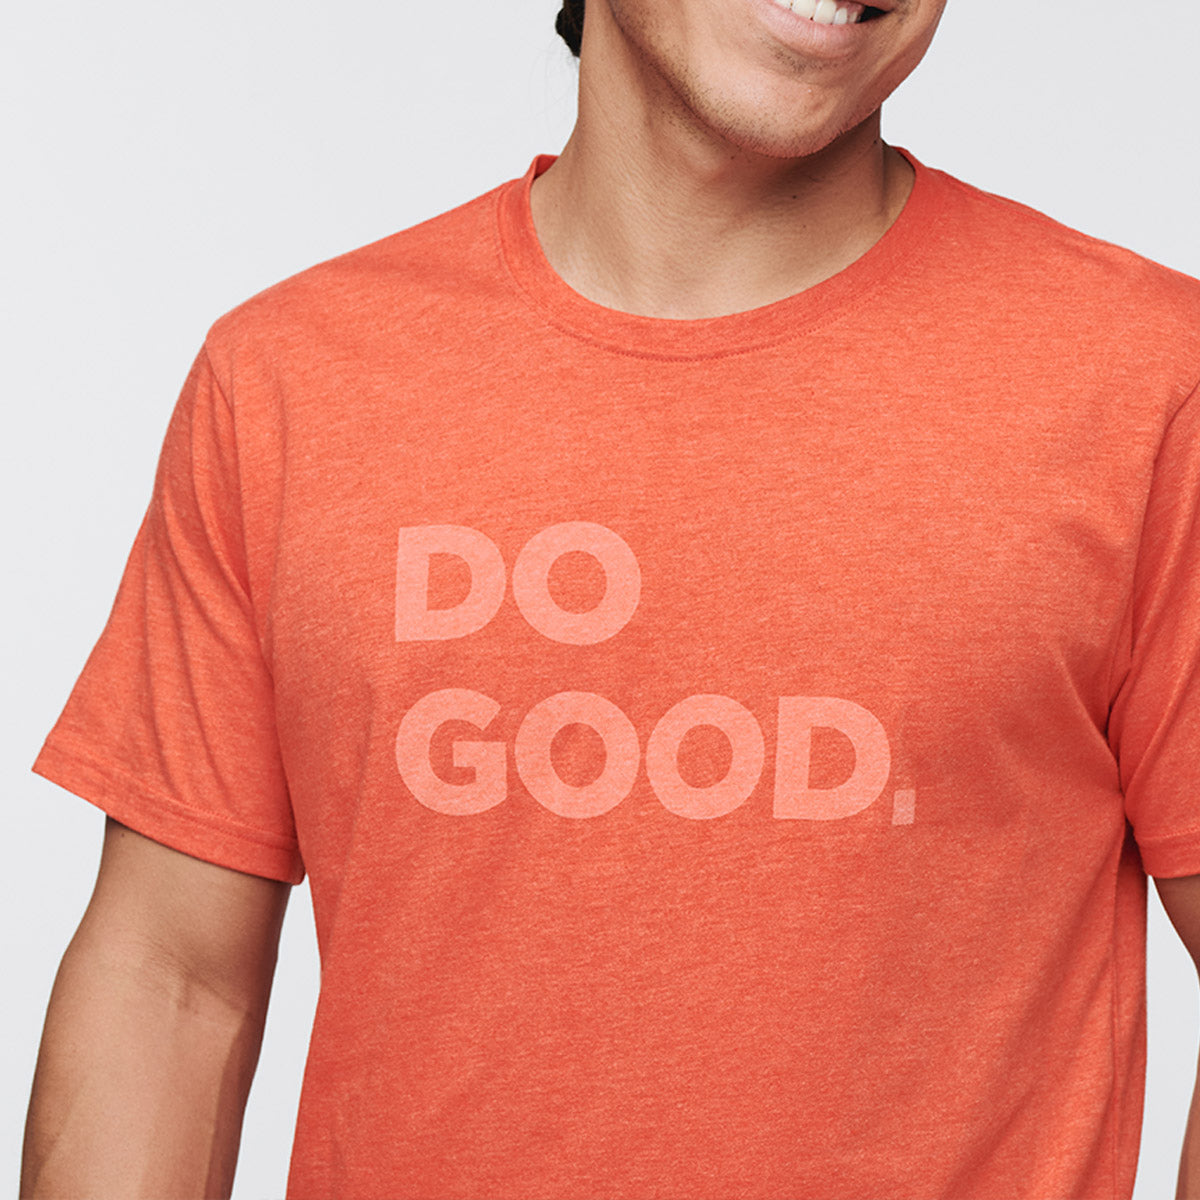 Cotopaxi Do Good T-Shirt - MENS コトパクシ ドゥグッドTシャツ メンズ